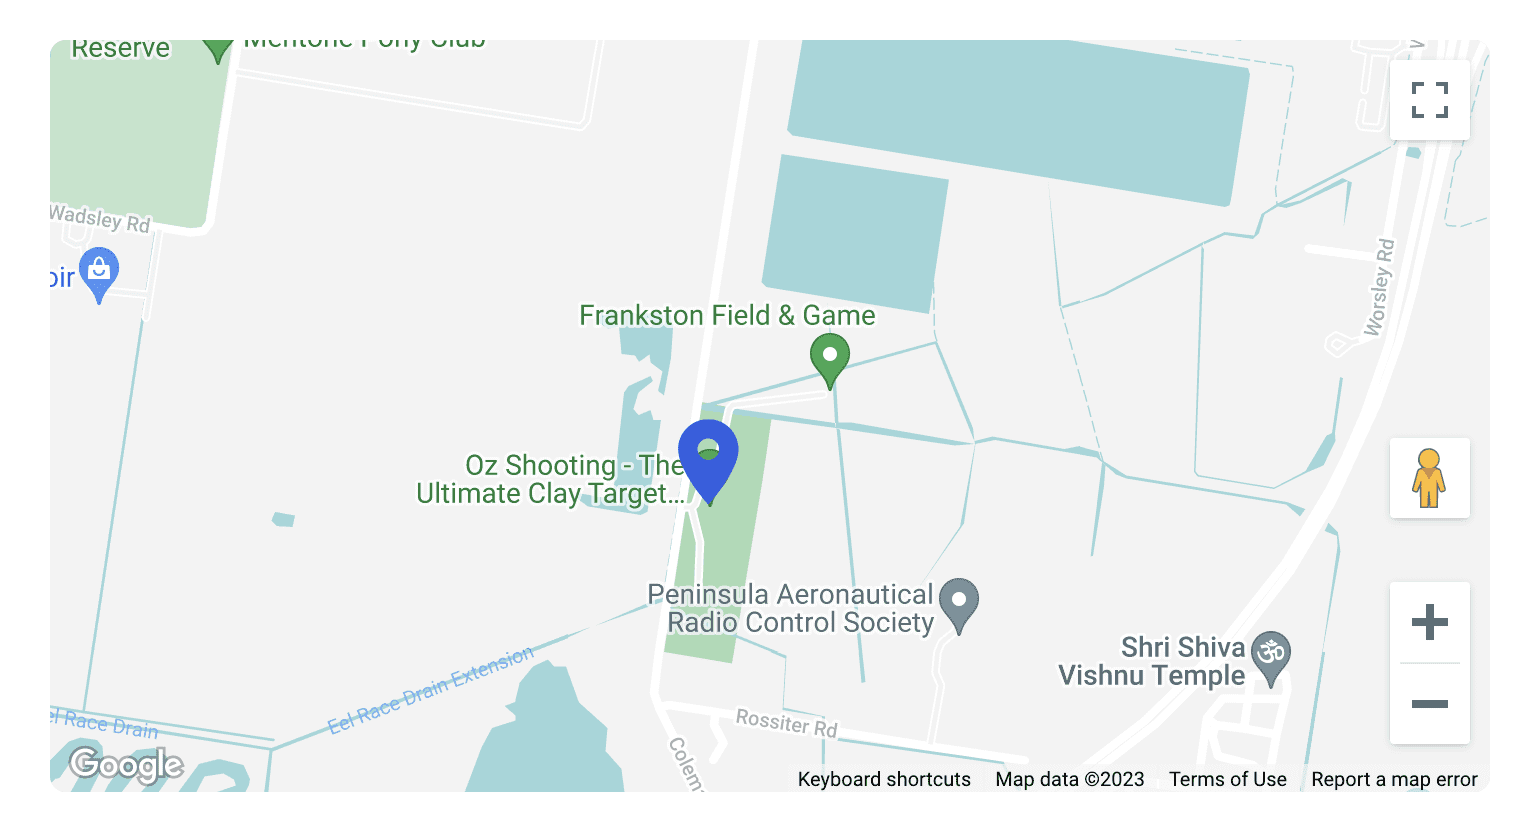 Satellite map of Oz Shooting location